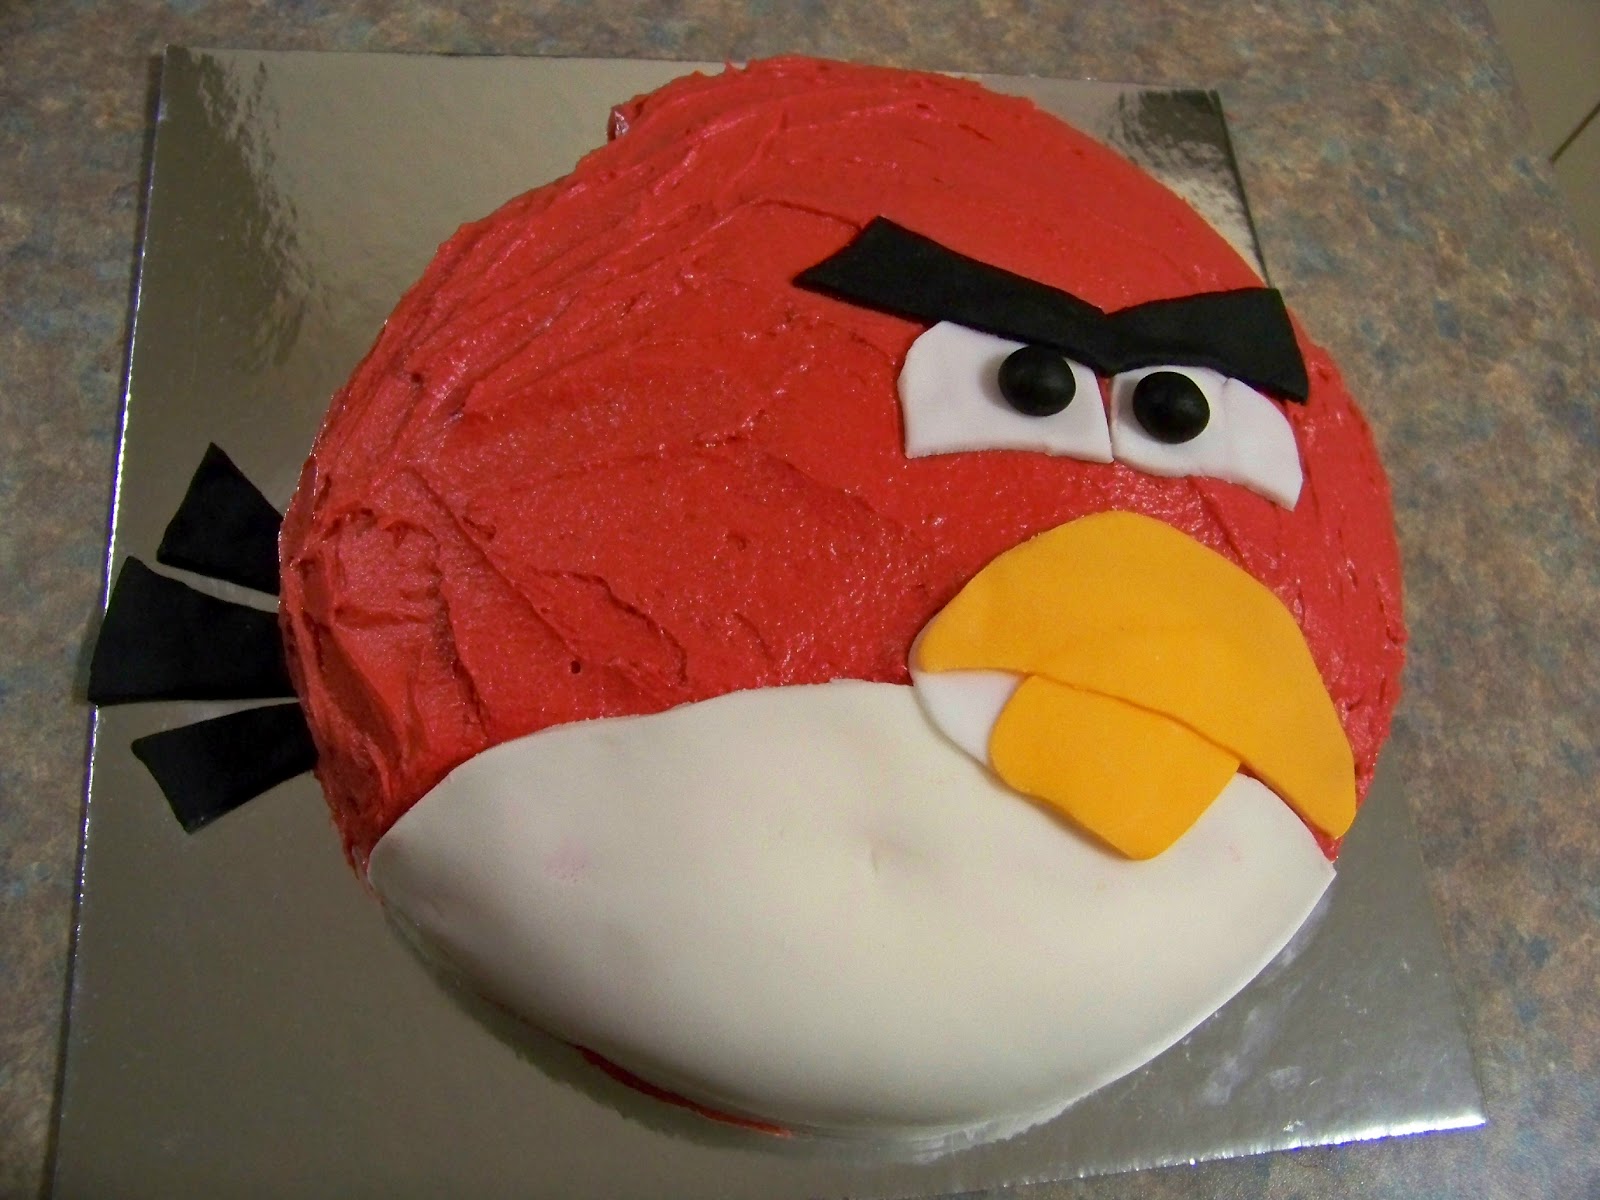 Actual Angry Bird